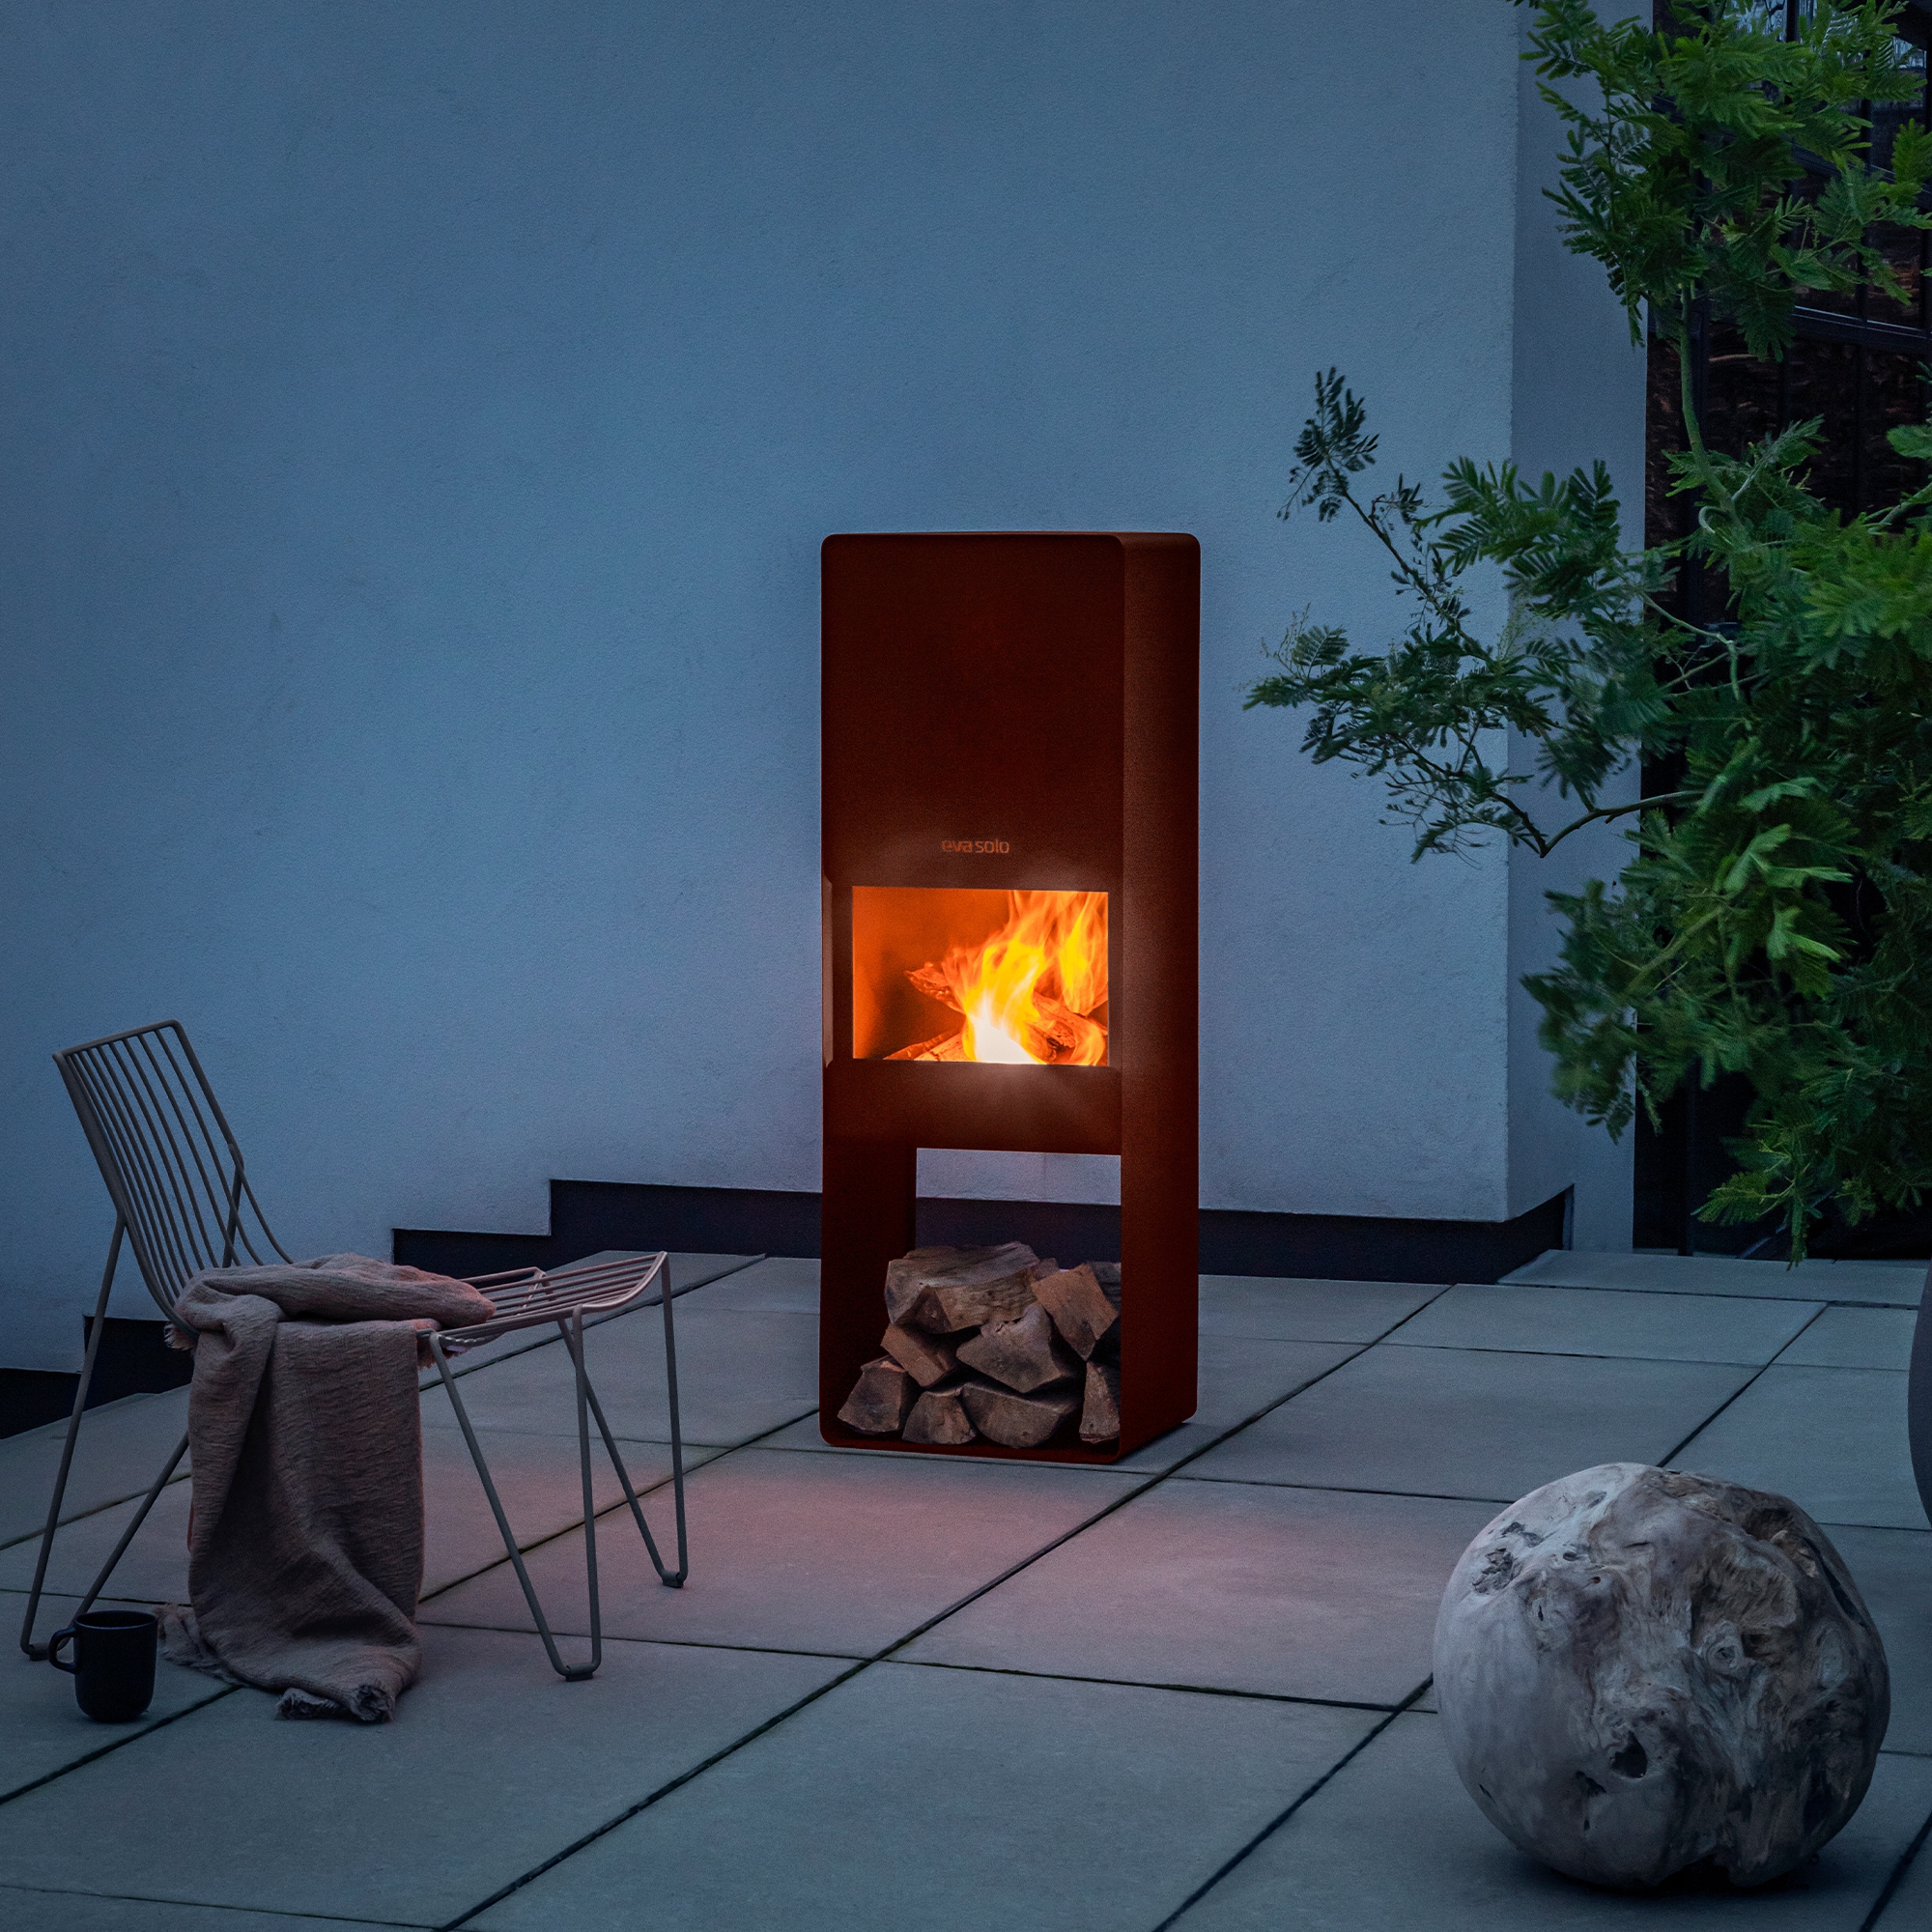 Eva Solo - FireBox garden wood burner